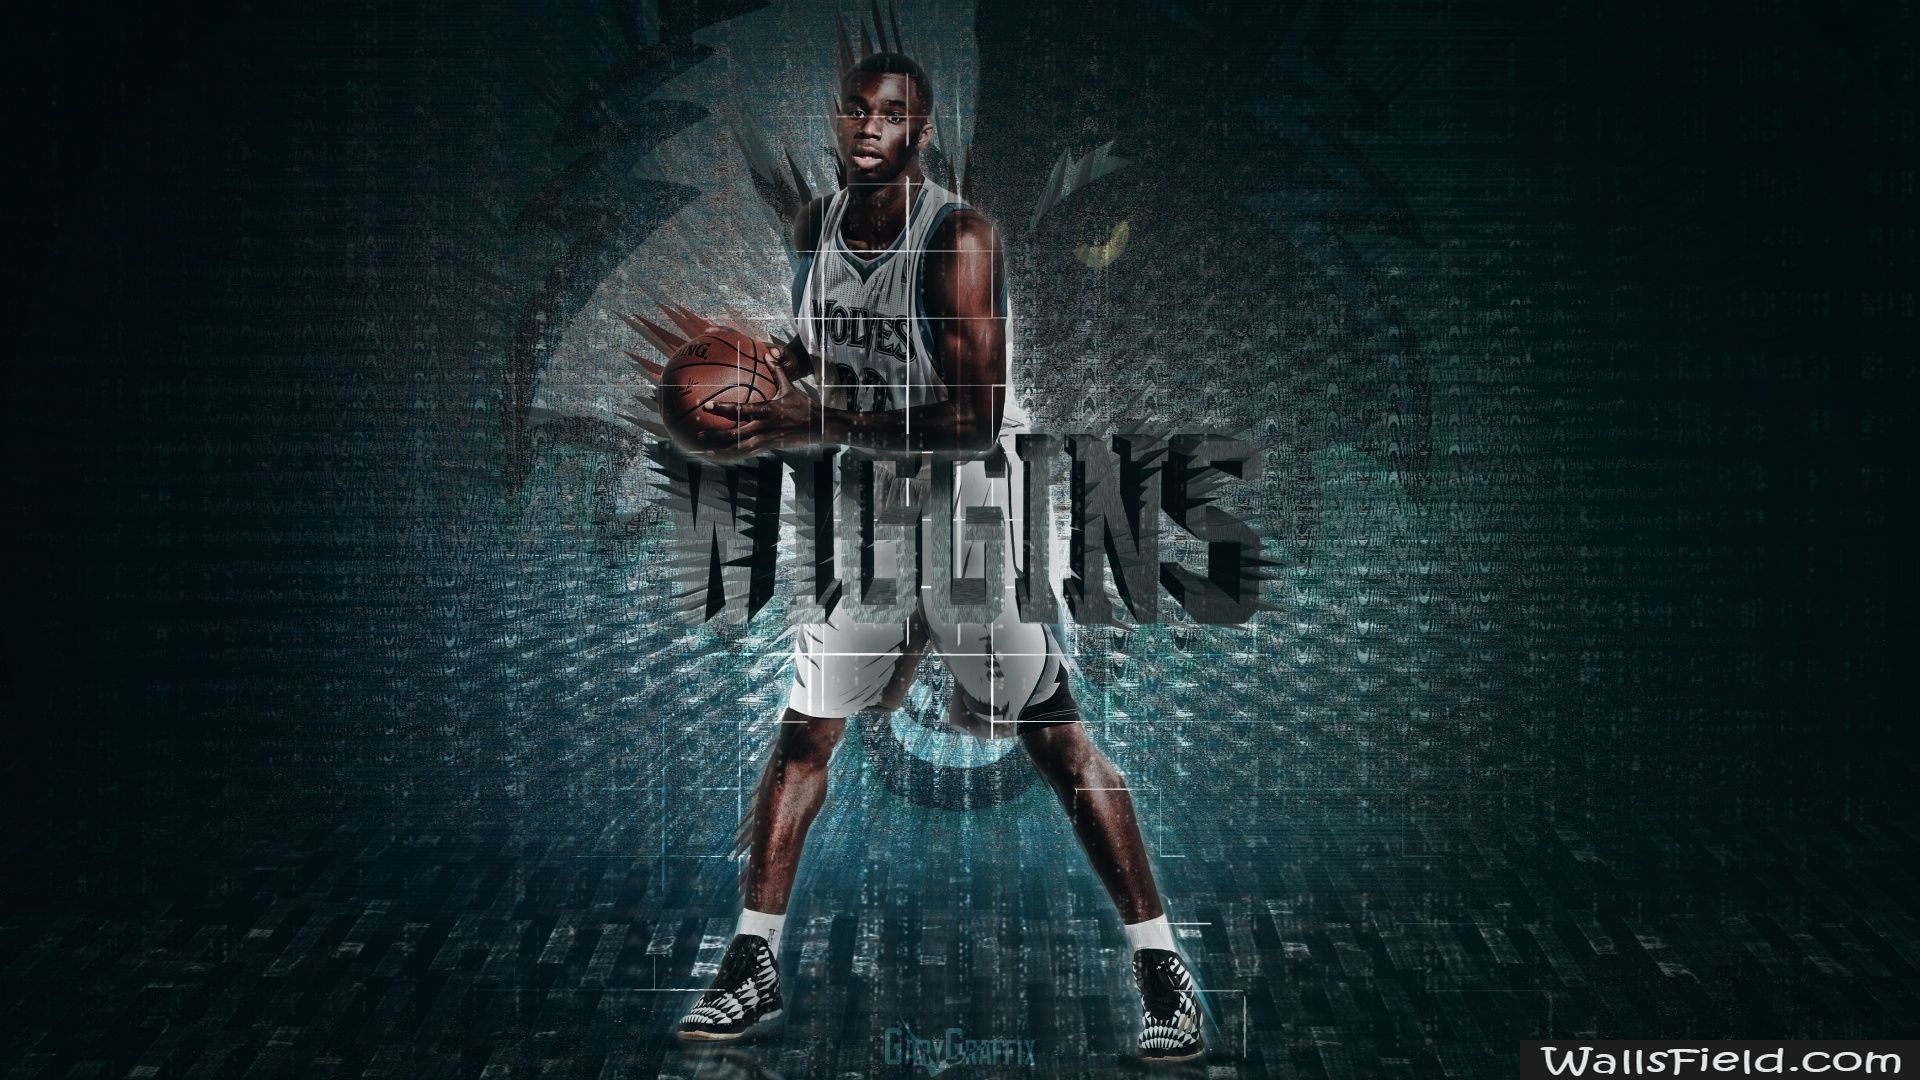 Andrew Wiggins Timberwolves - Wallsfield.com | Free HD Wallpapers